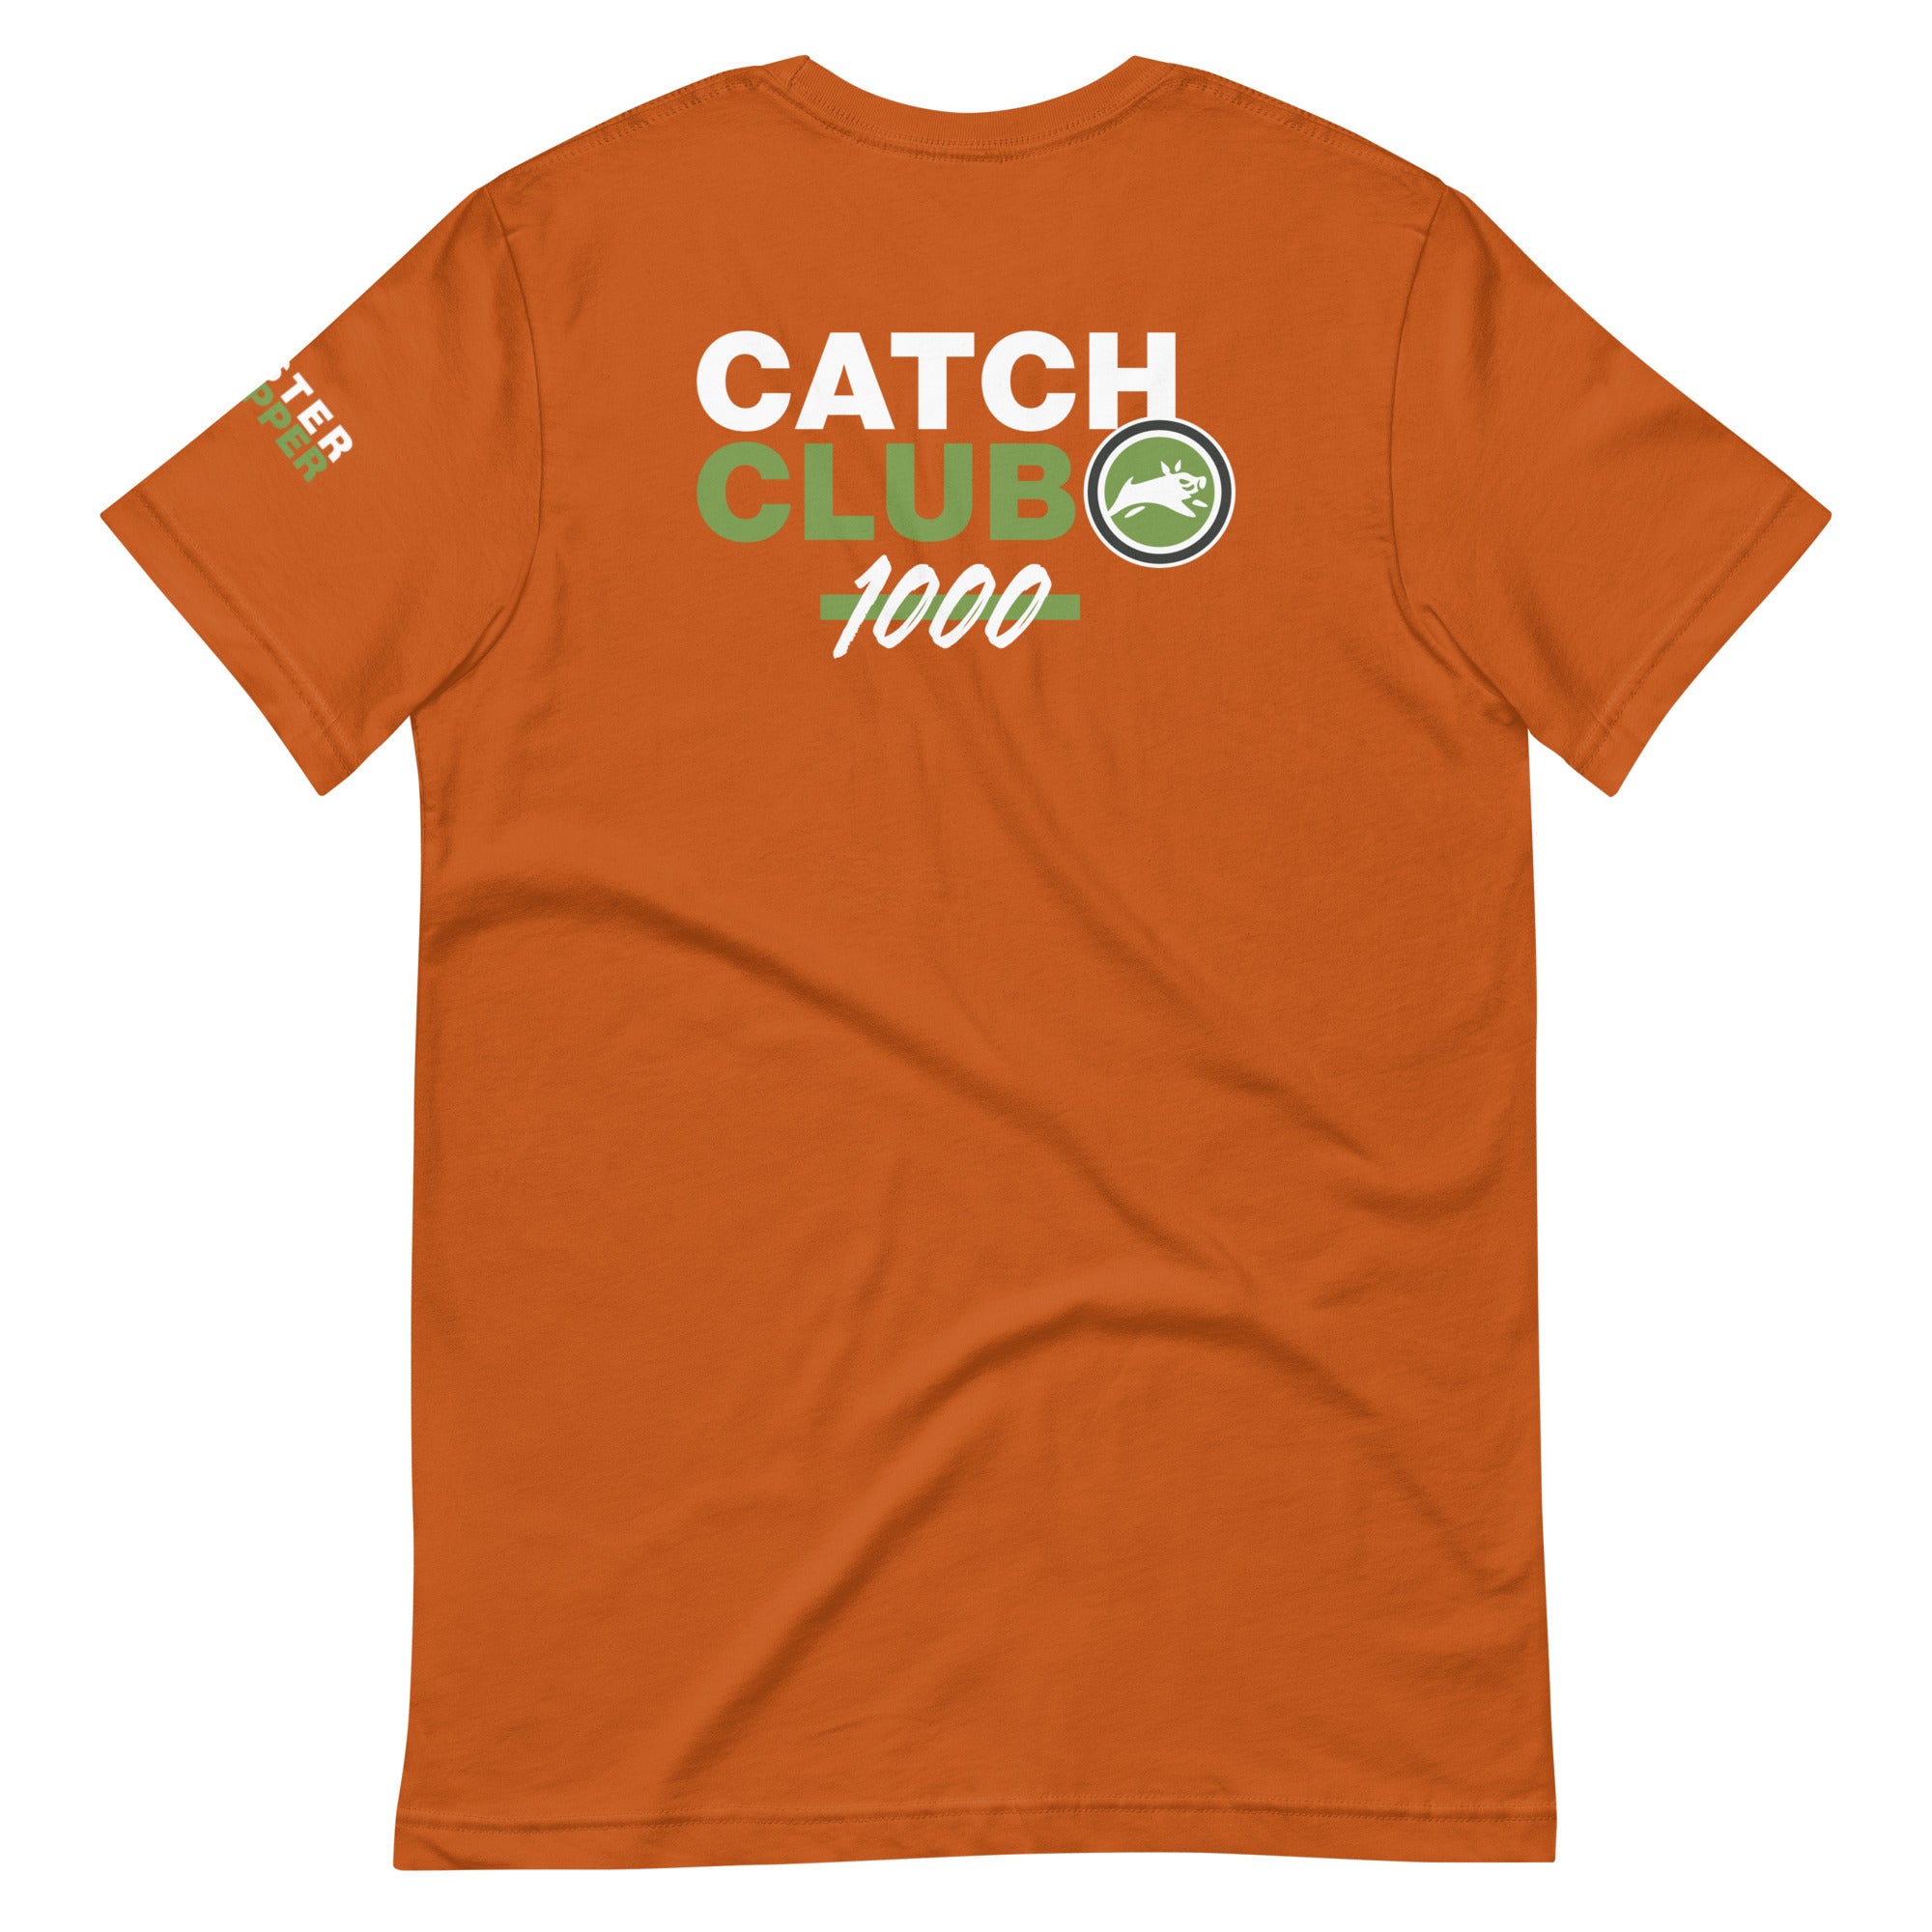 1000 Catch Club Short-Sleeve Unisex T-Shirt